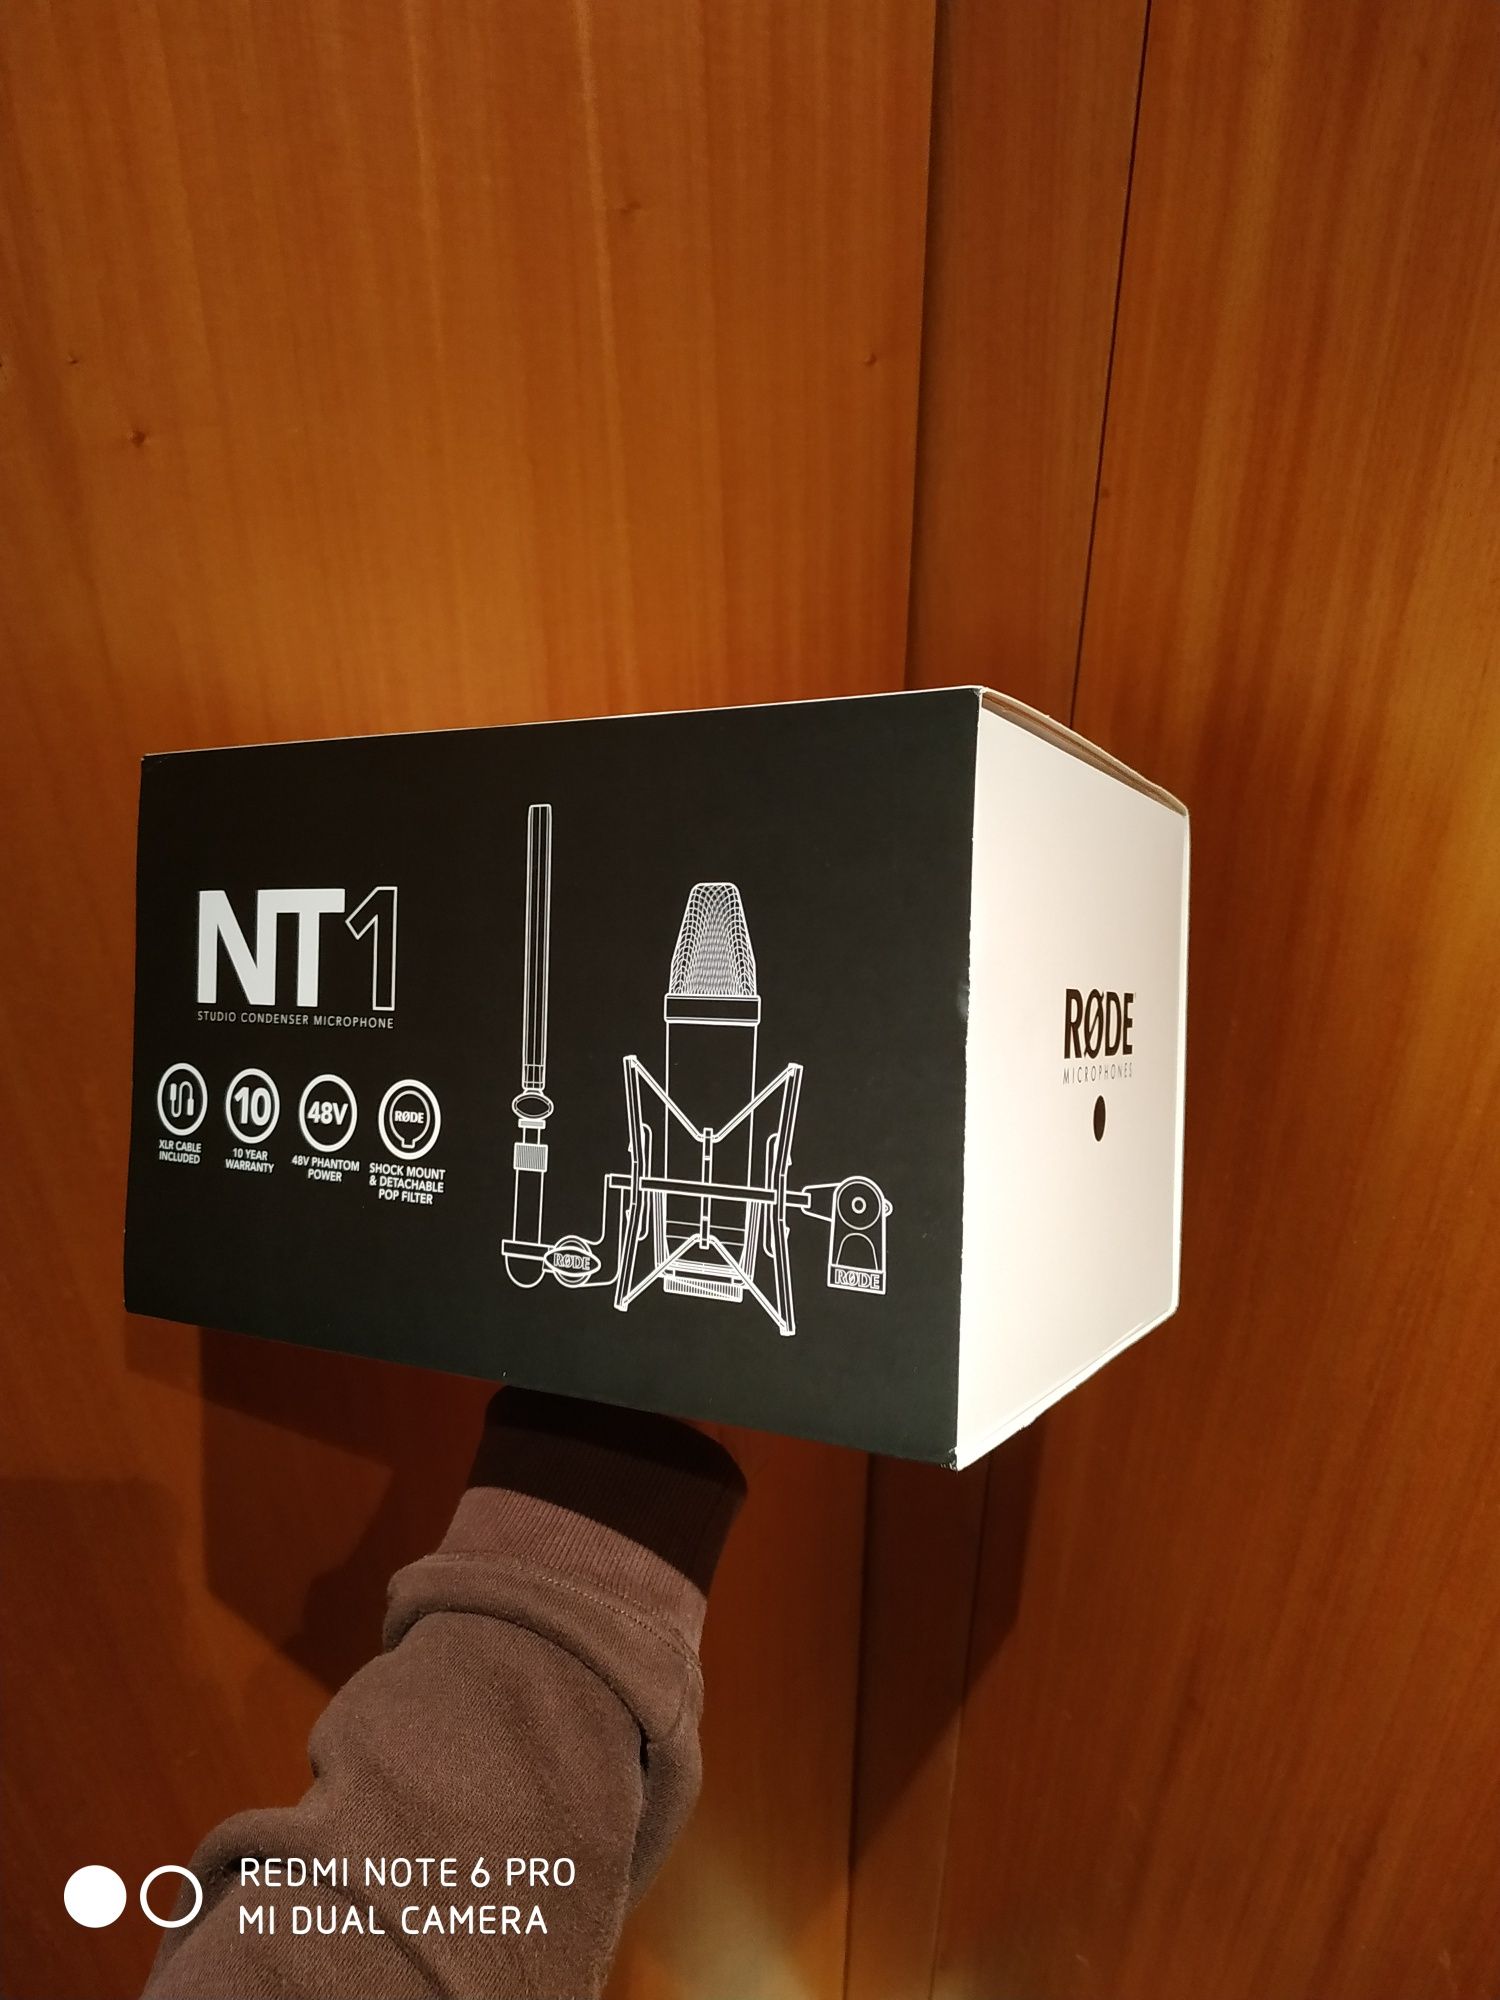 Kit complete RODE NT1 Black Series c/ garantia